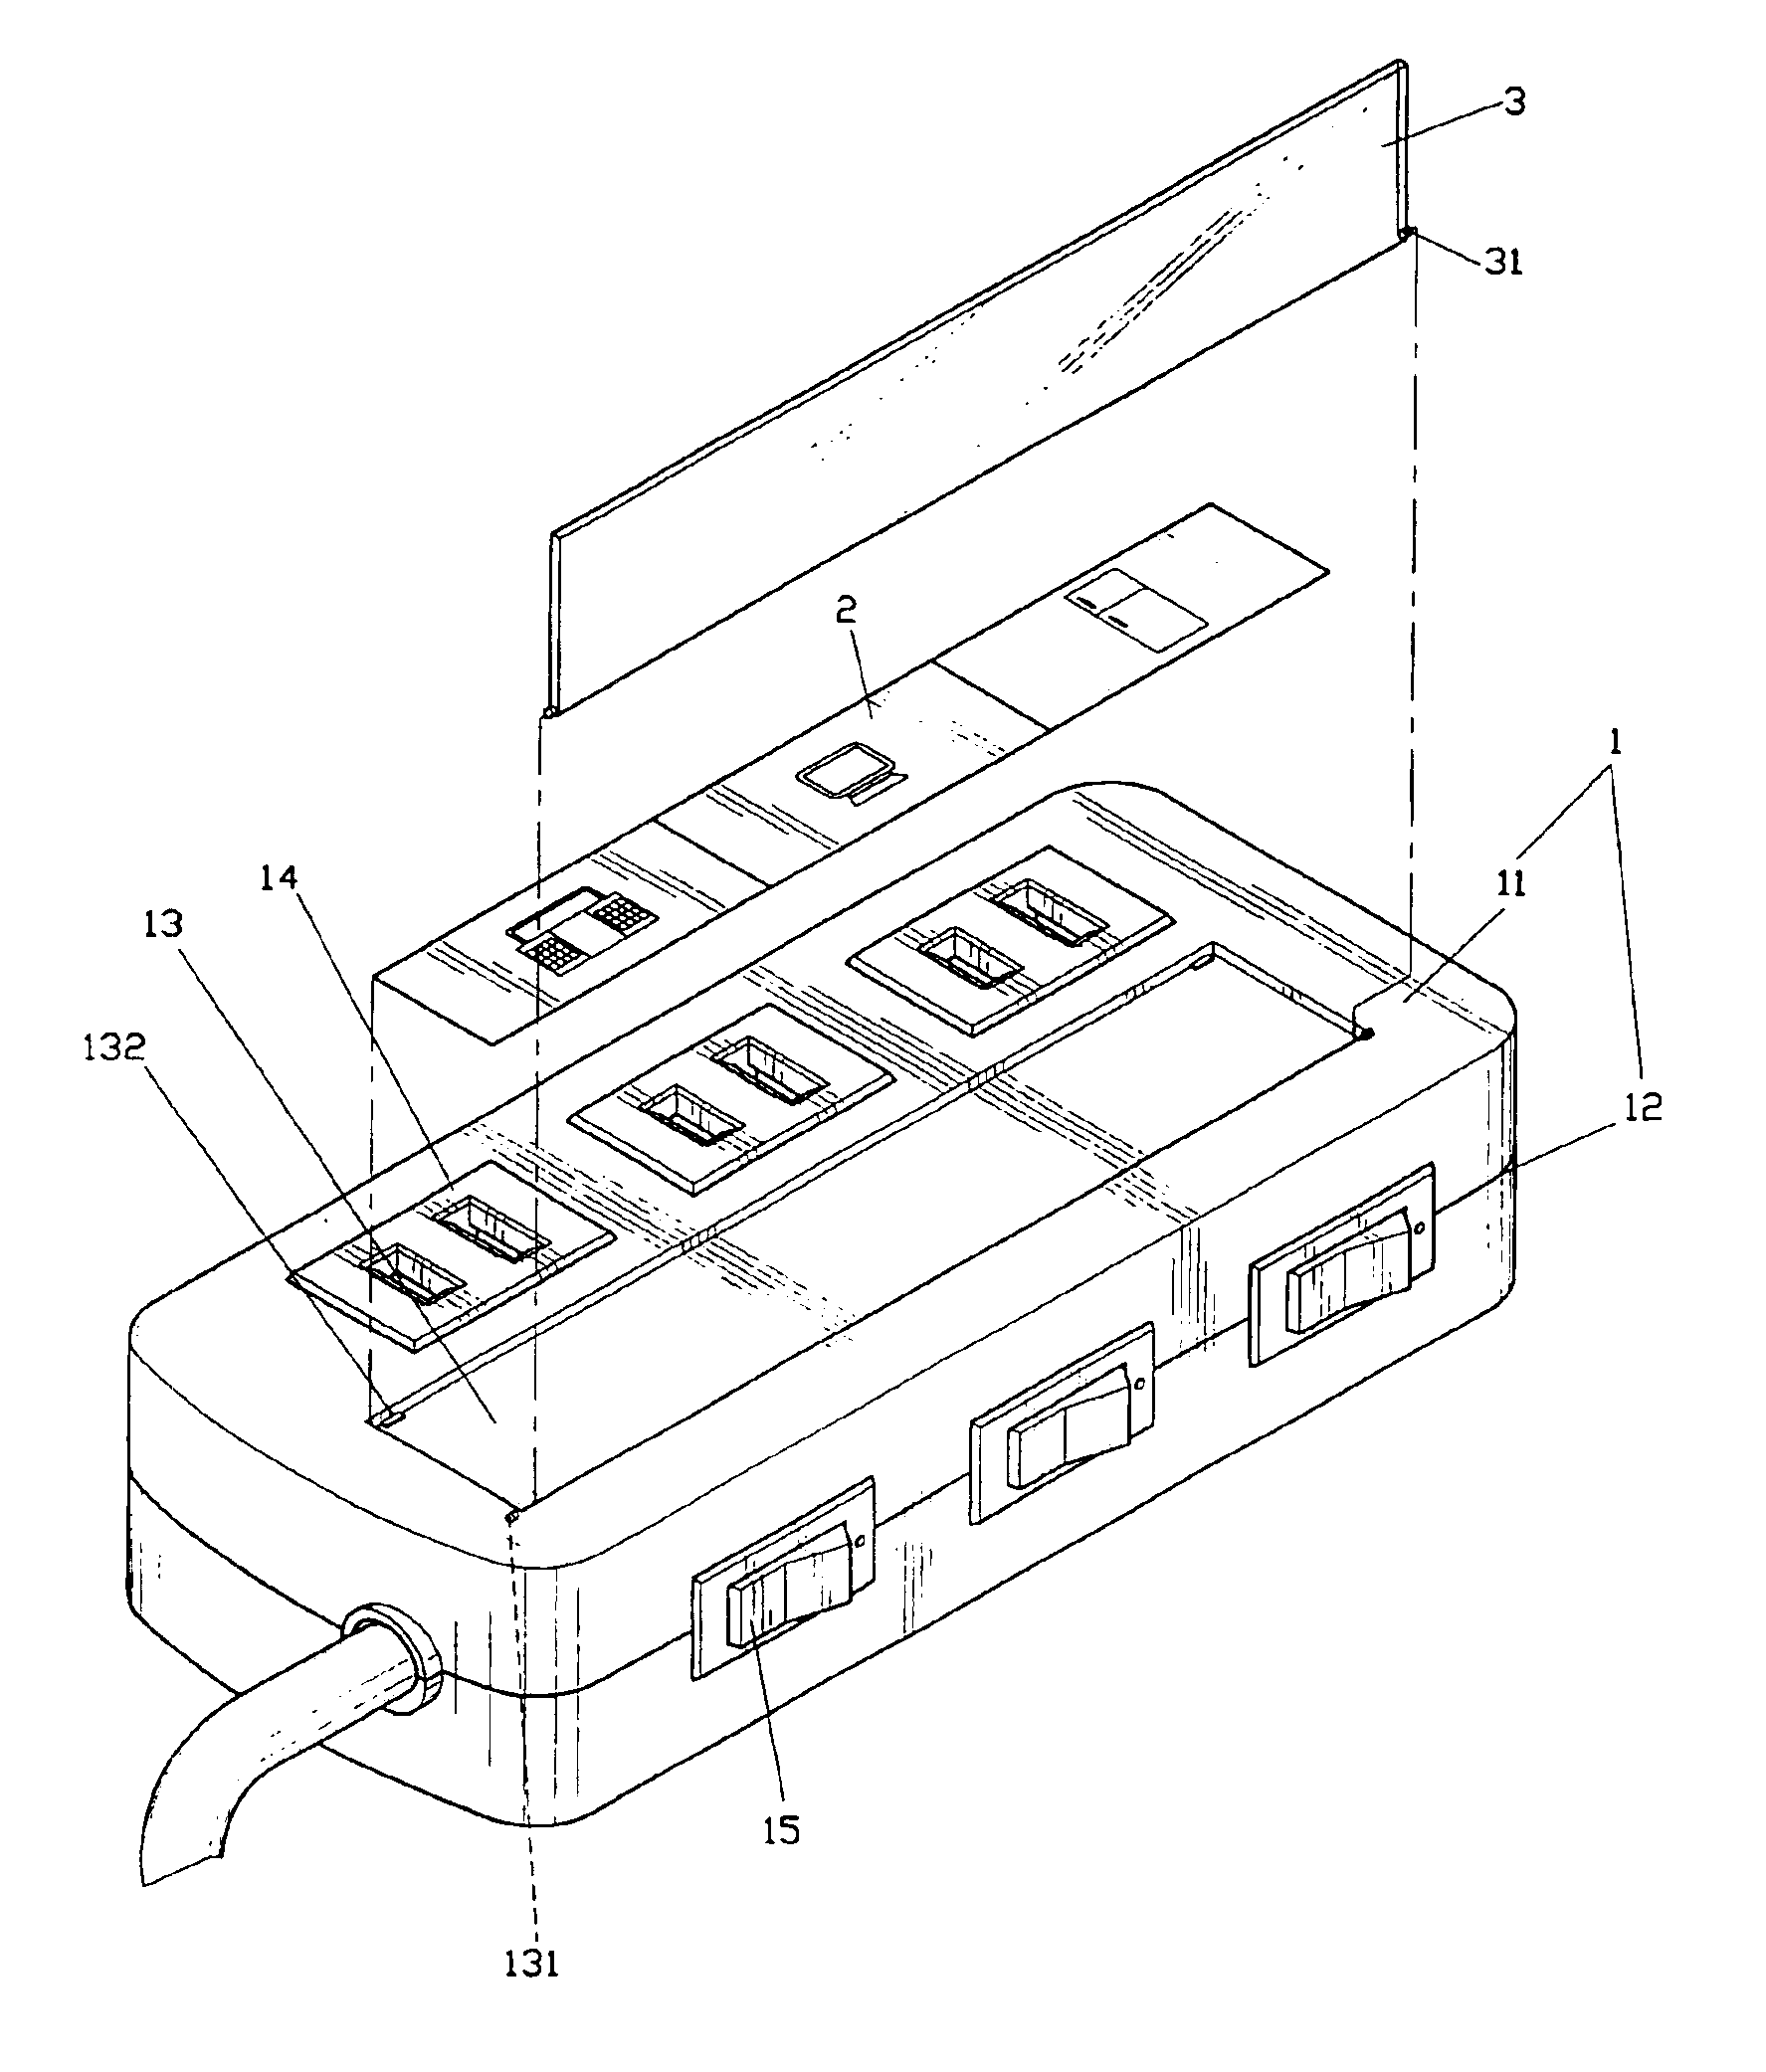 Interlining panel structure for multiple socket